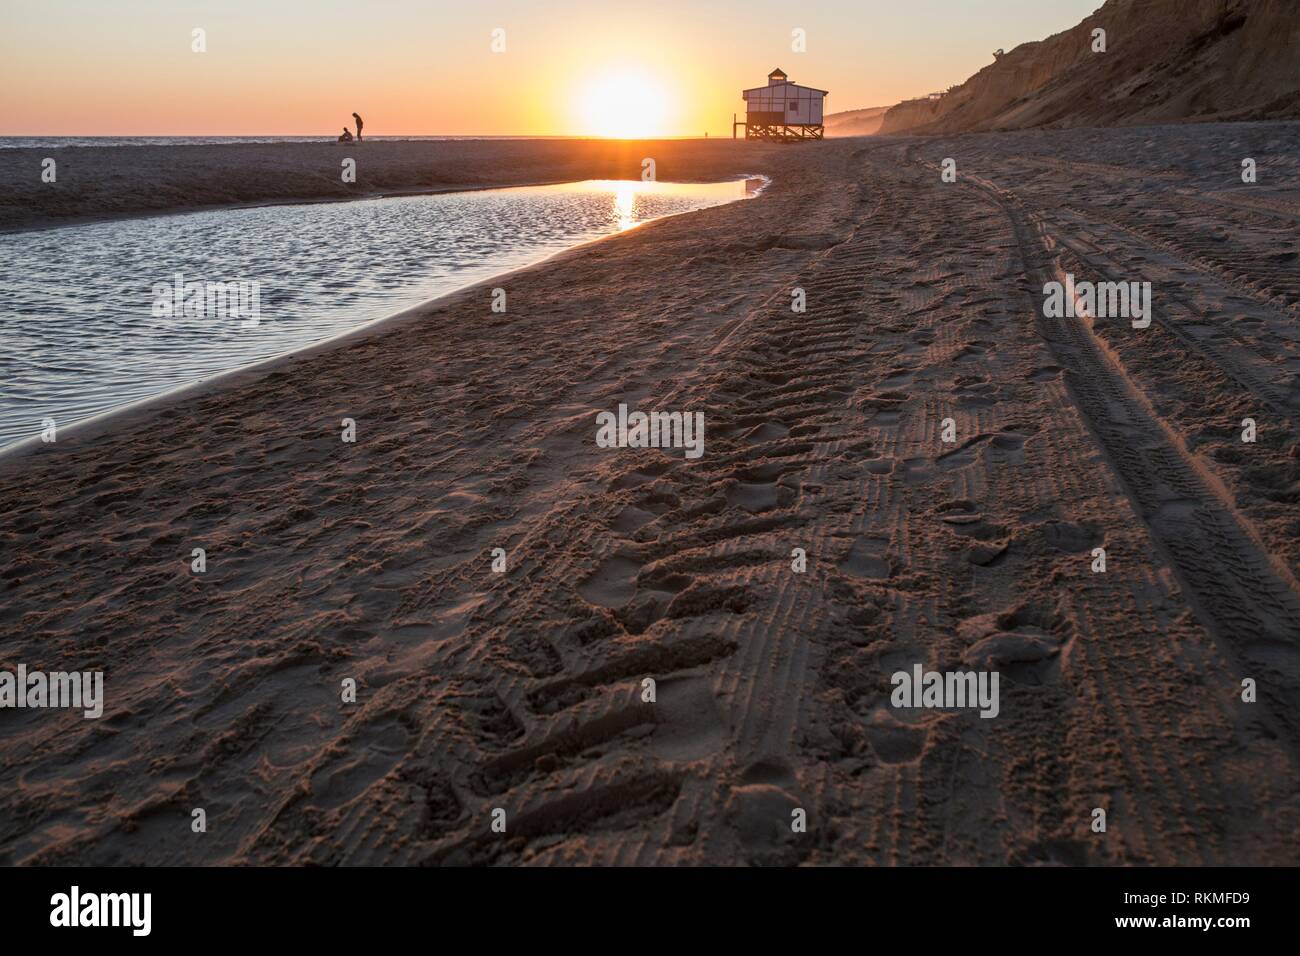 Letzte Schwimmer in der Nähe Chiringuito Strand bei Sonnenuntergang, Costa de la Luz Küste, Matalascañas, Huelva. Sonnenuntergang. Stockfoto